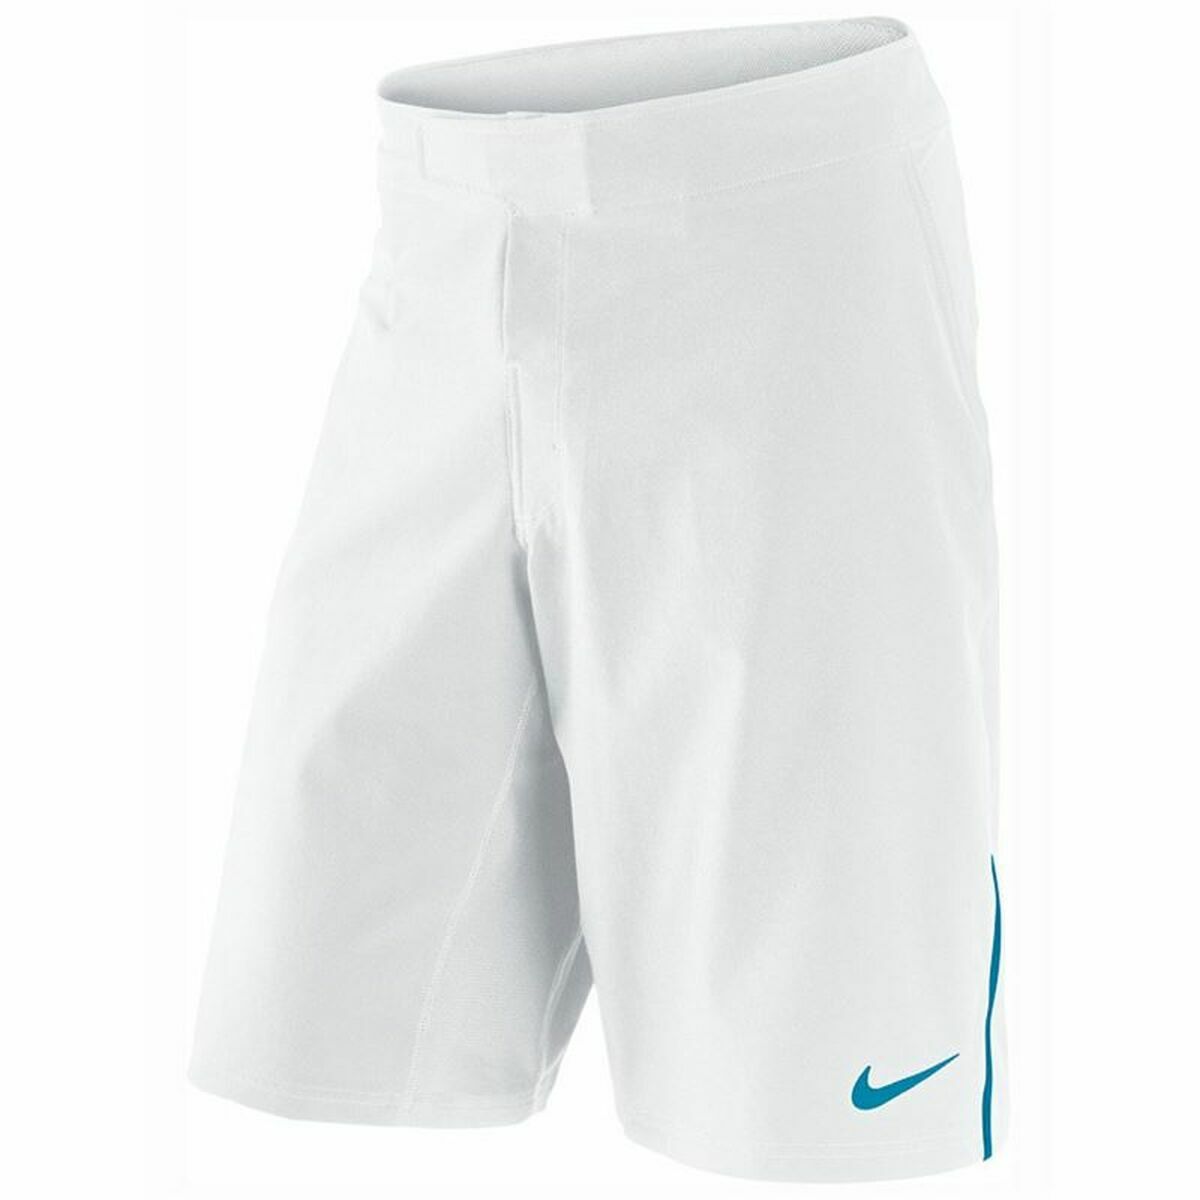 Nike Rafa White шорты